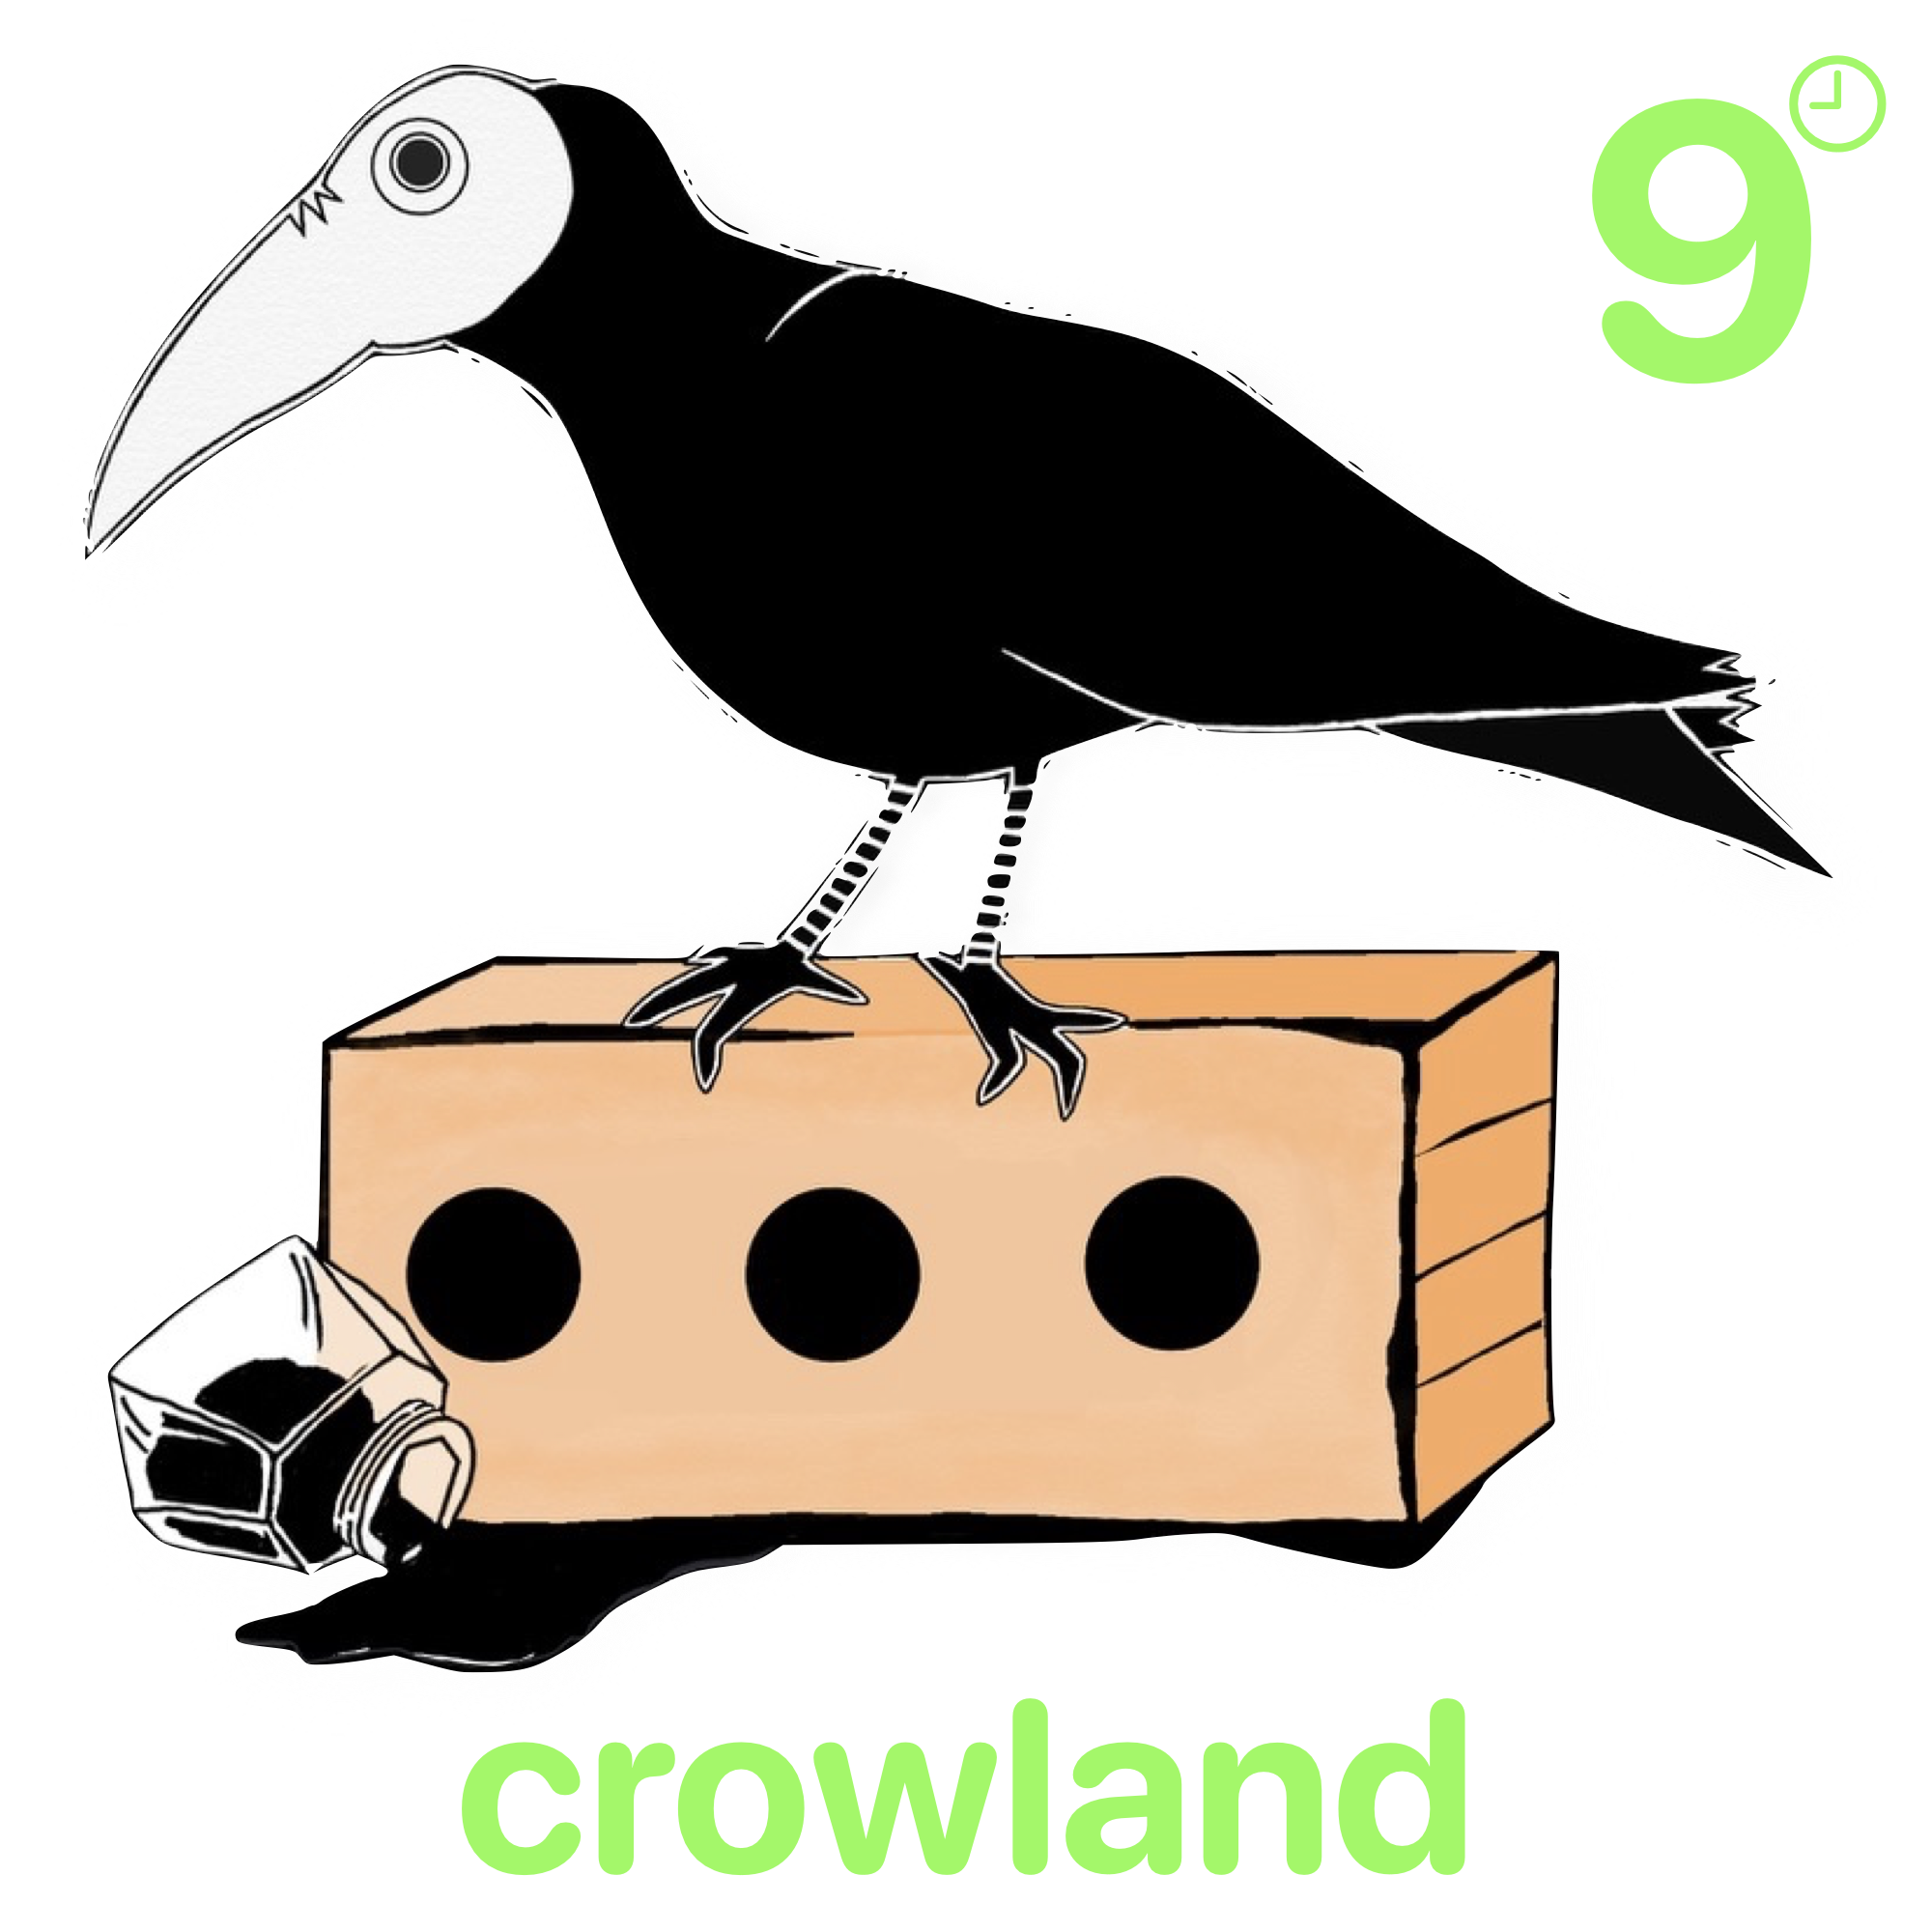 9 O’Clock Nasty – “Crowland”